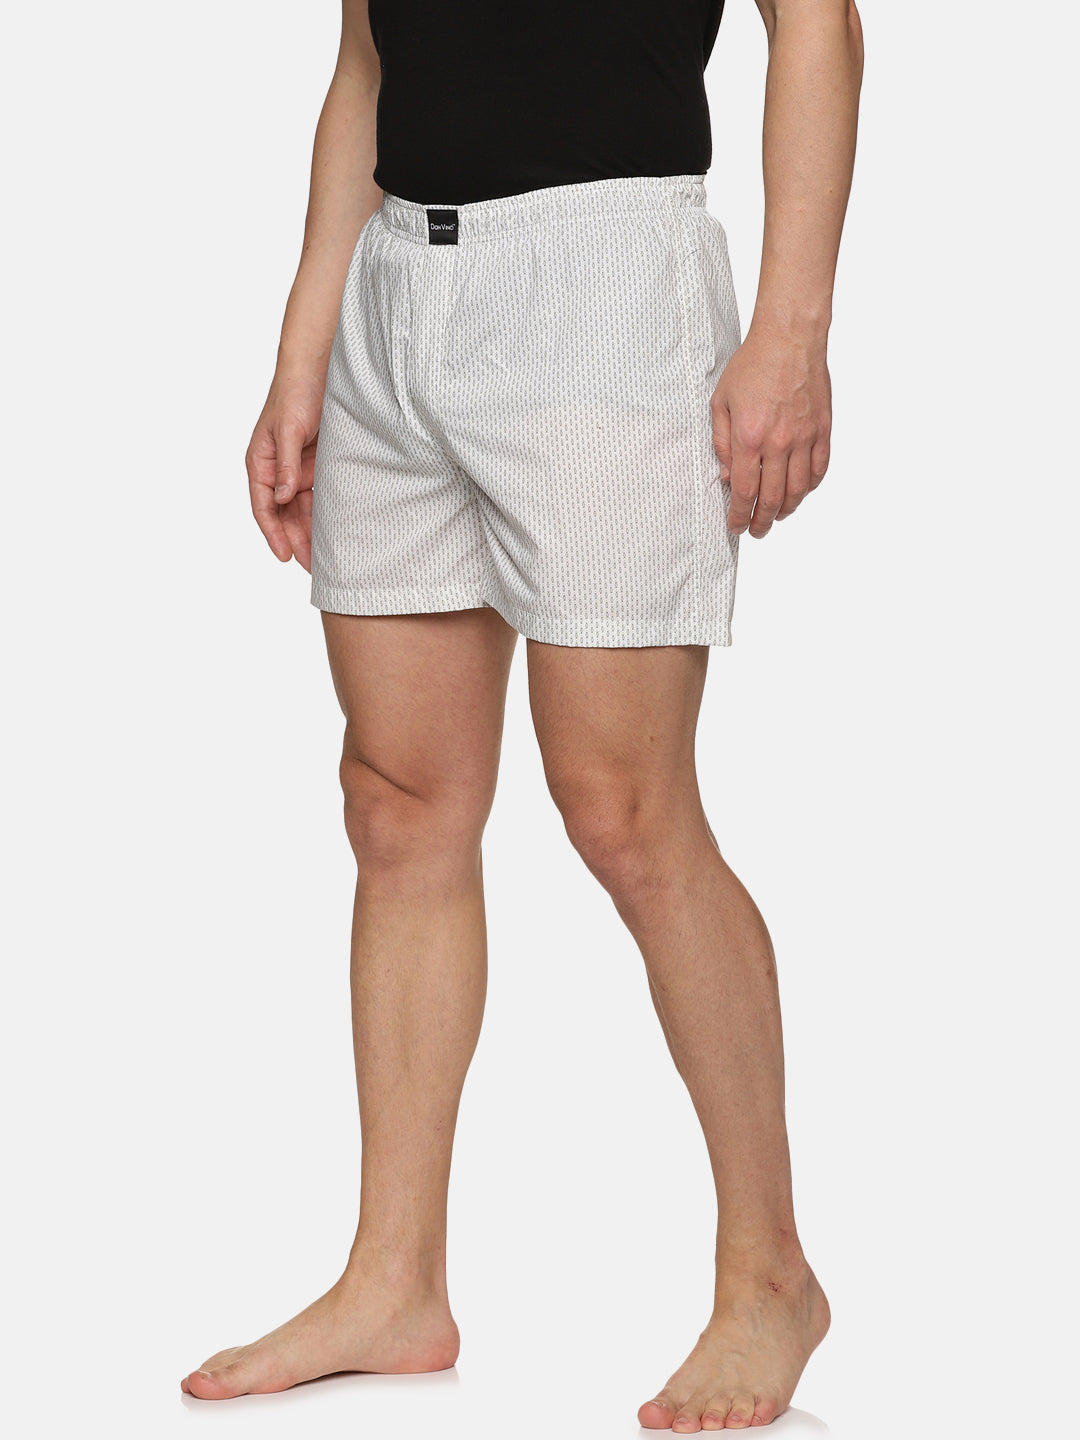 Don Vino Men White Printed Boxer Shorts